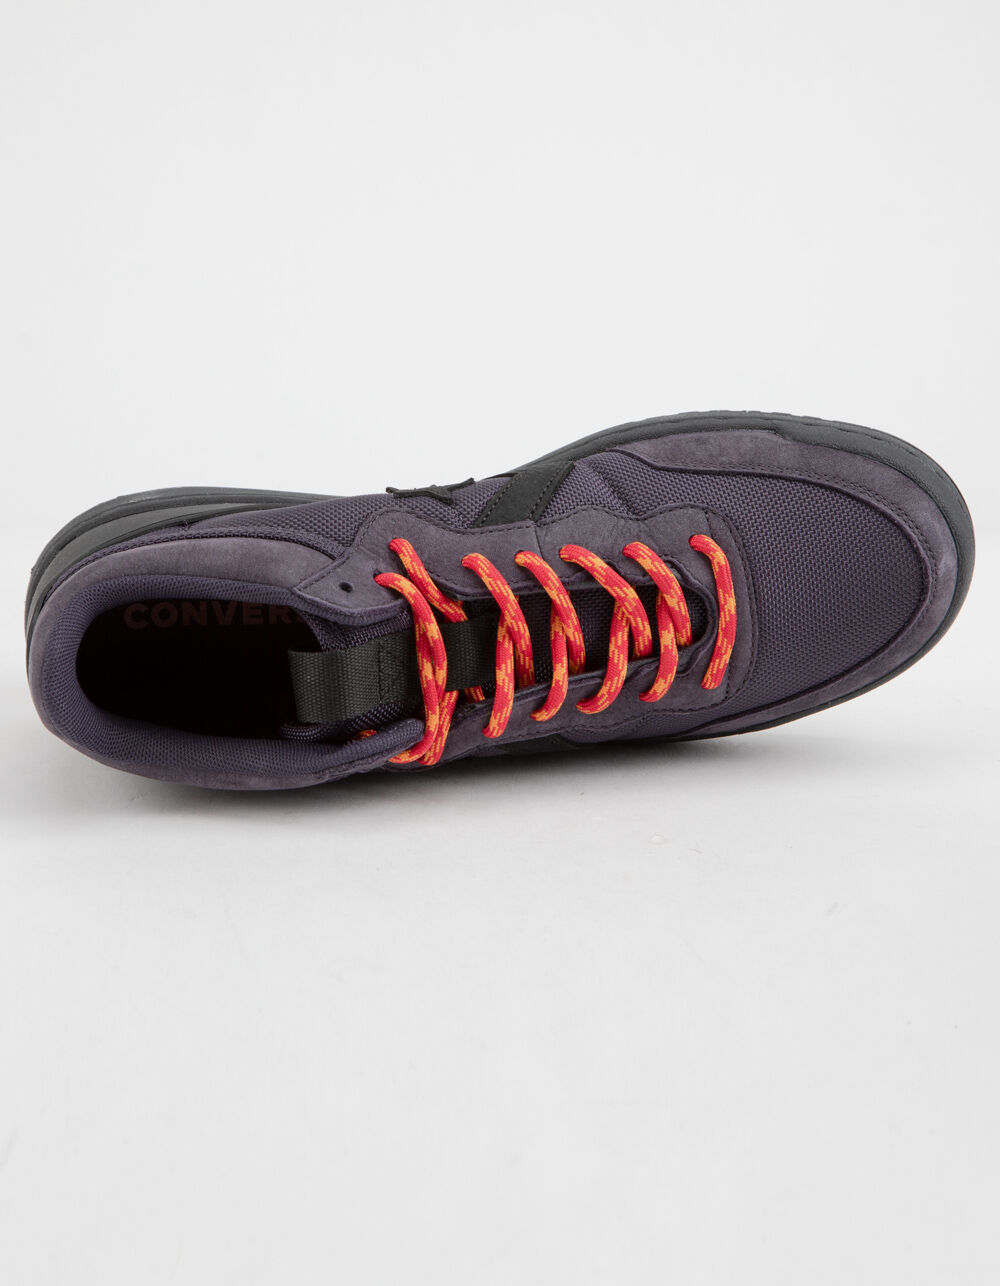 CONVERSE Fastbreak Purple Mid Shoes image number 2